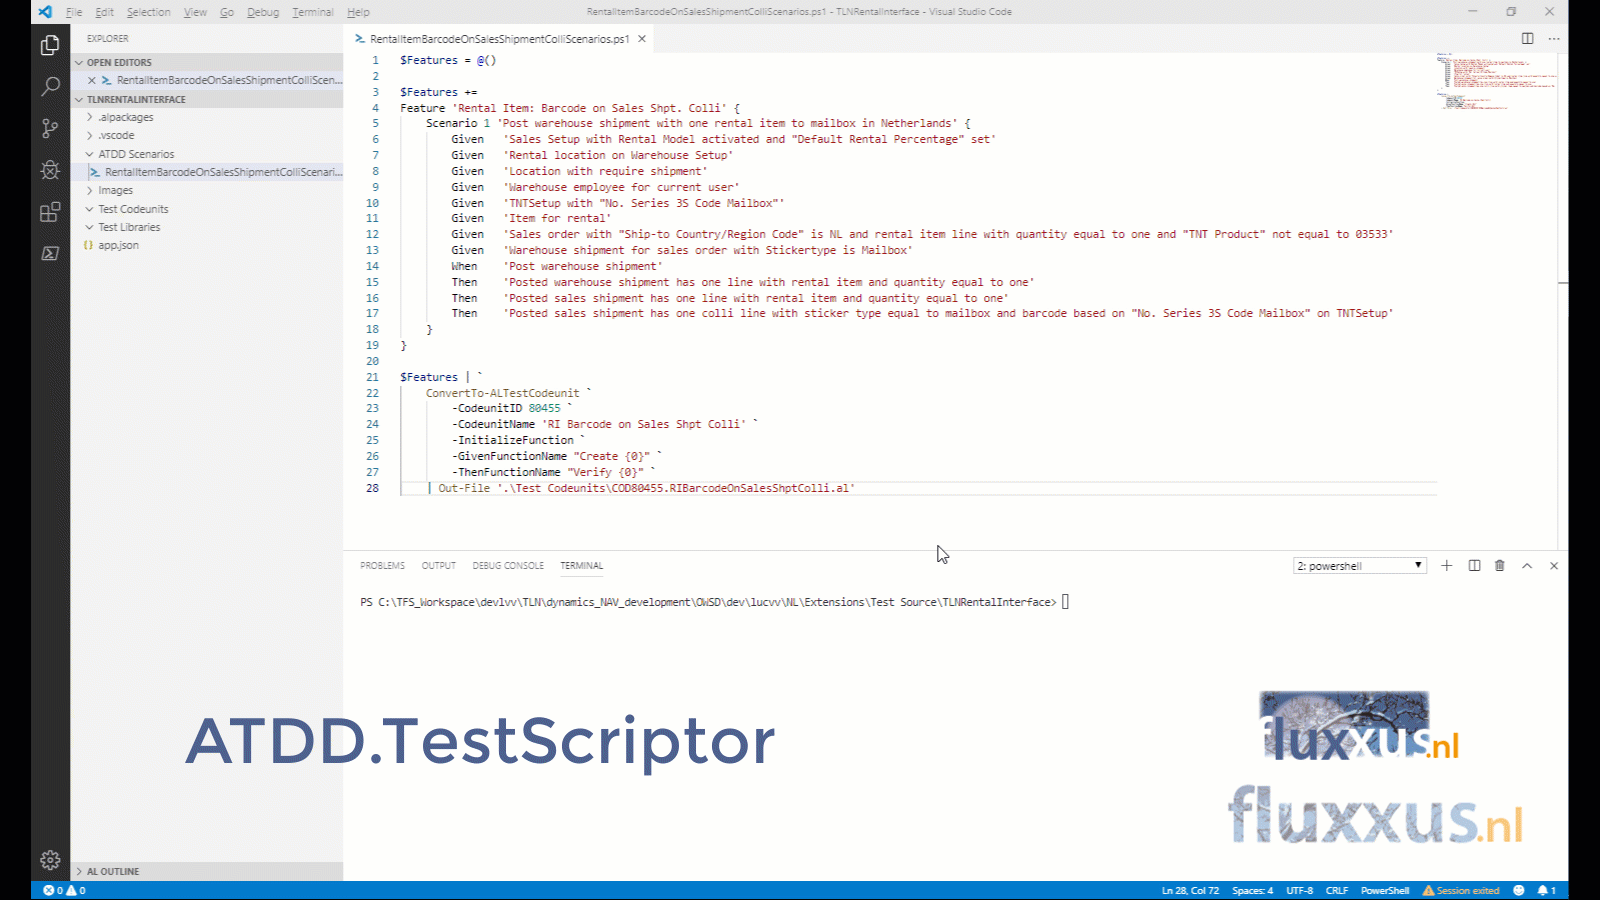 ATDD.TestScriptor Demo